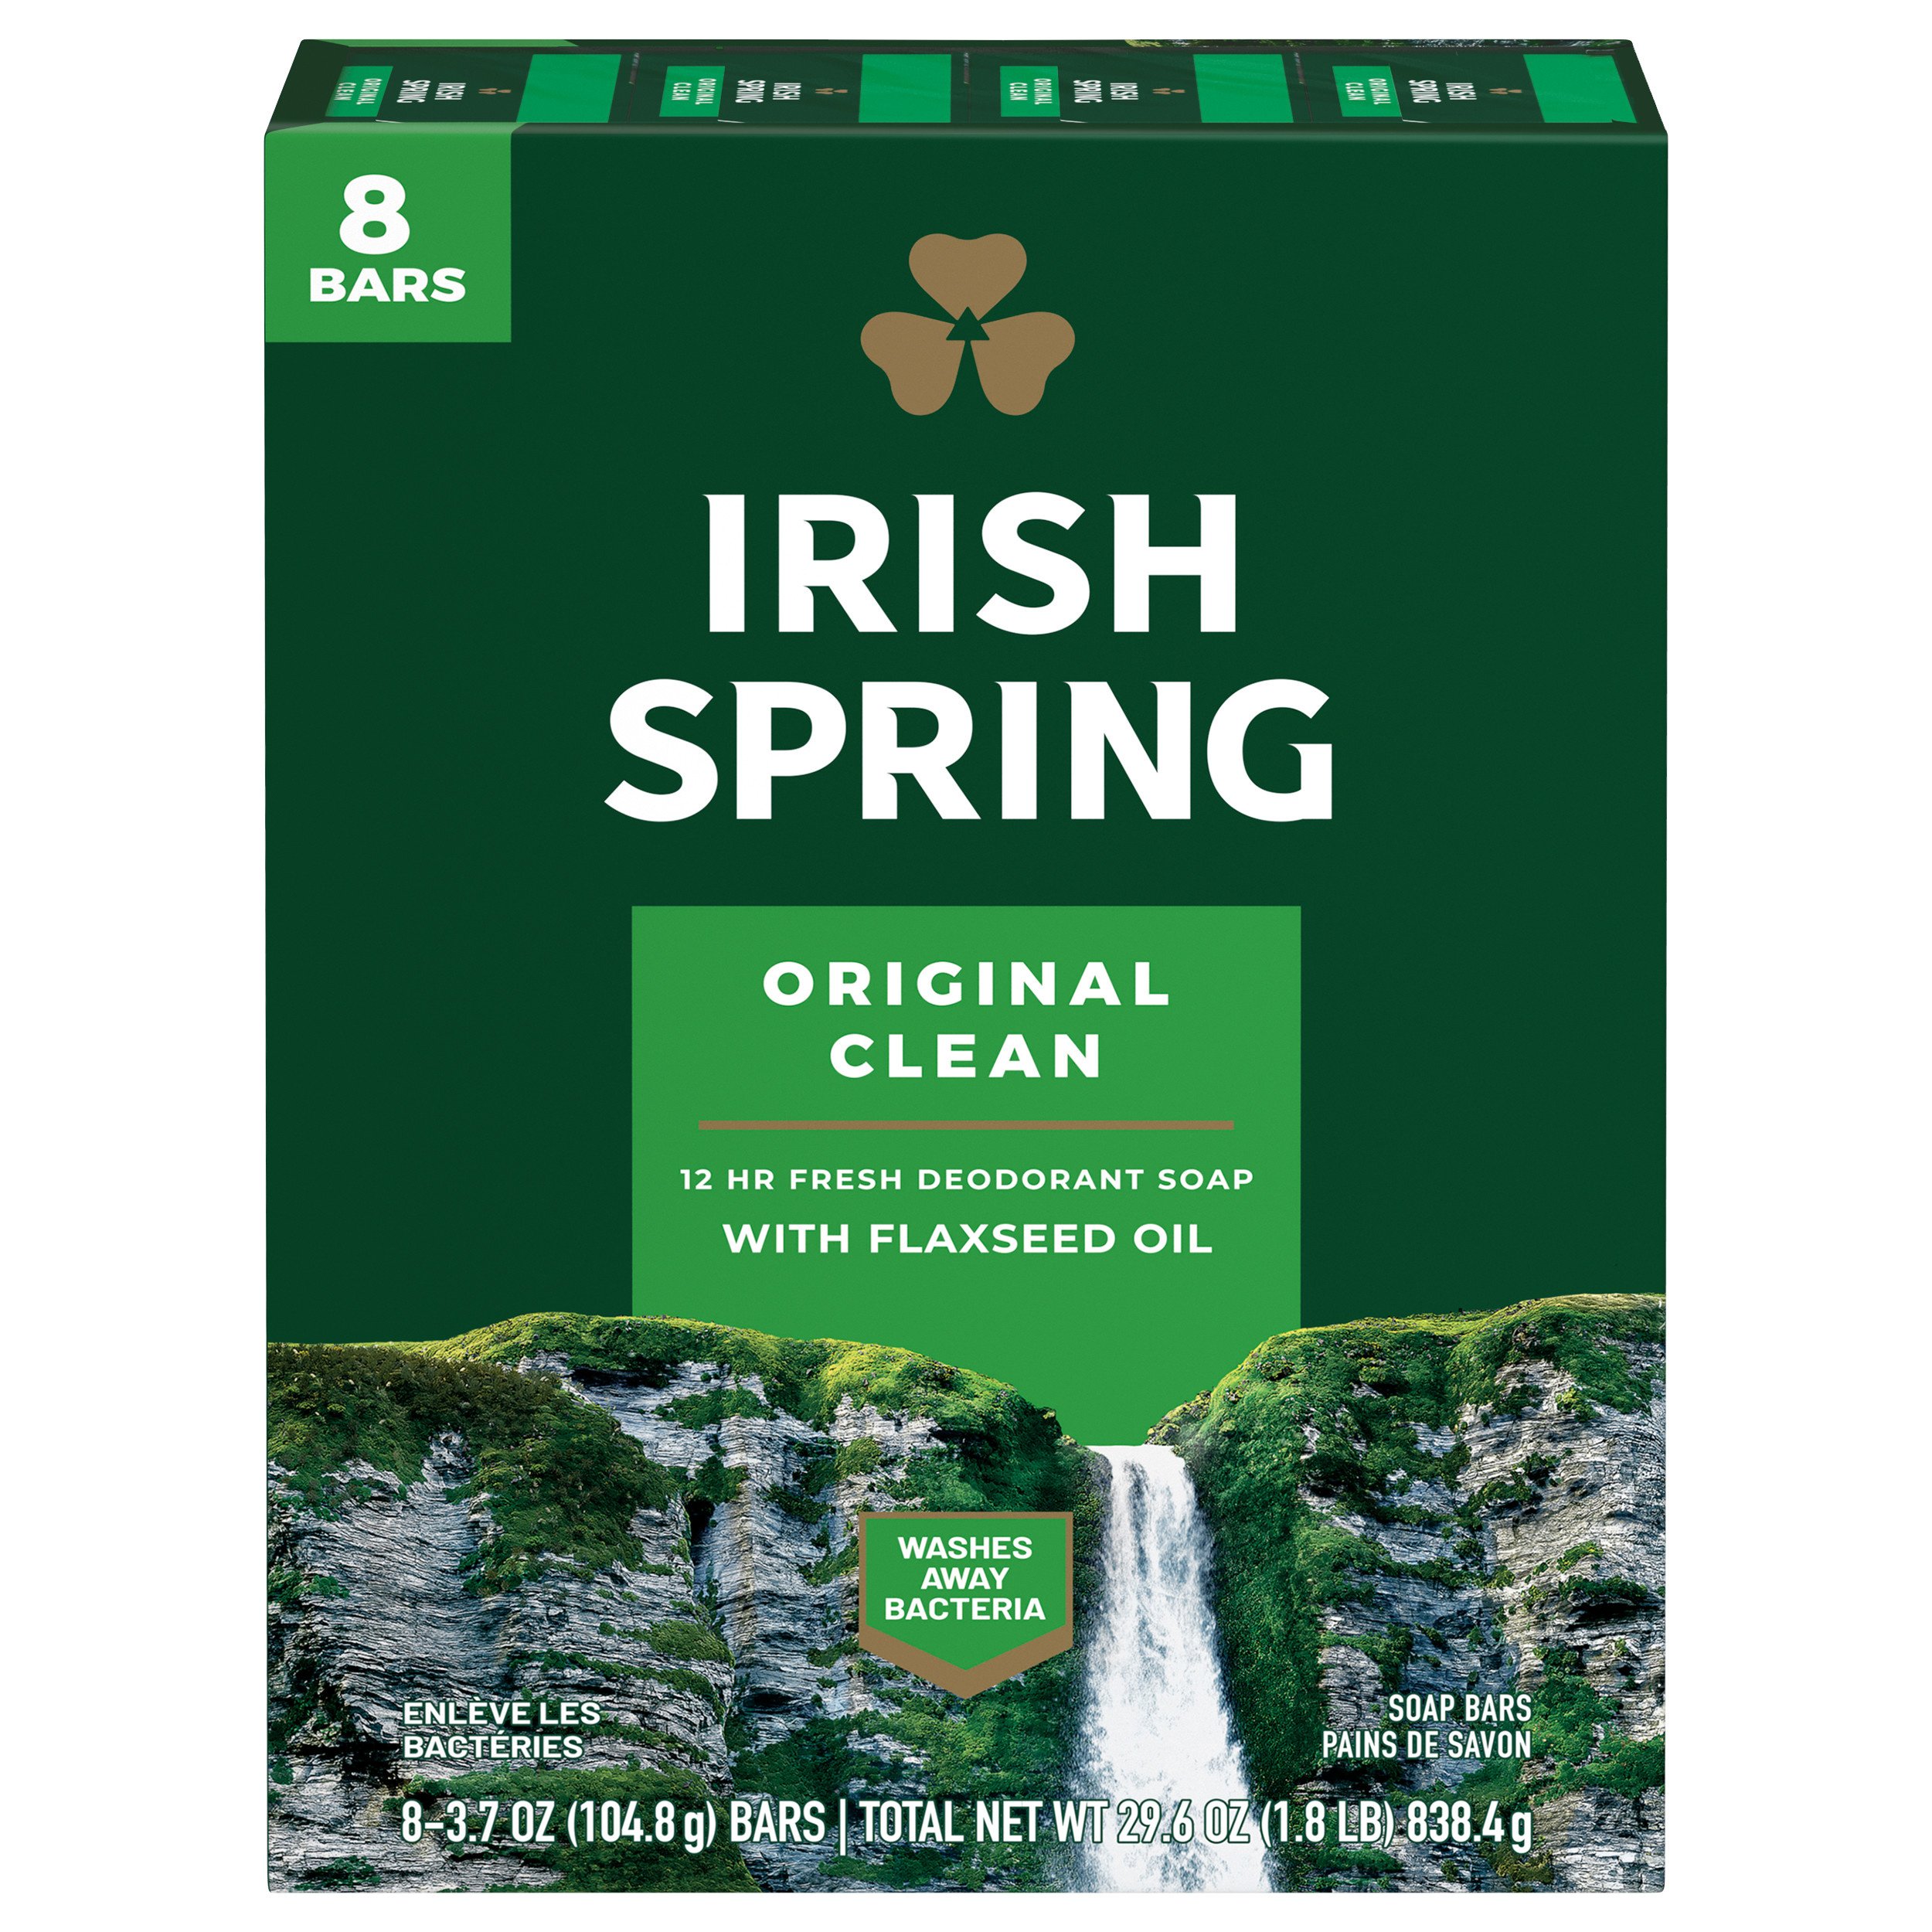 Irish Spring Original Clean Deodorant Bar Soap for Men - Shop & Bar Soap at